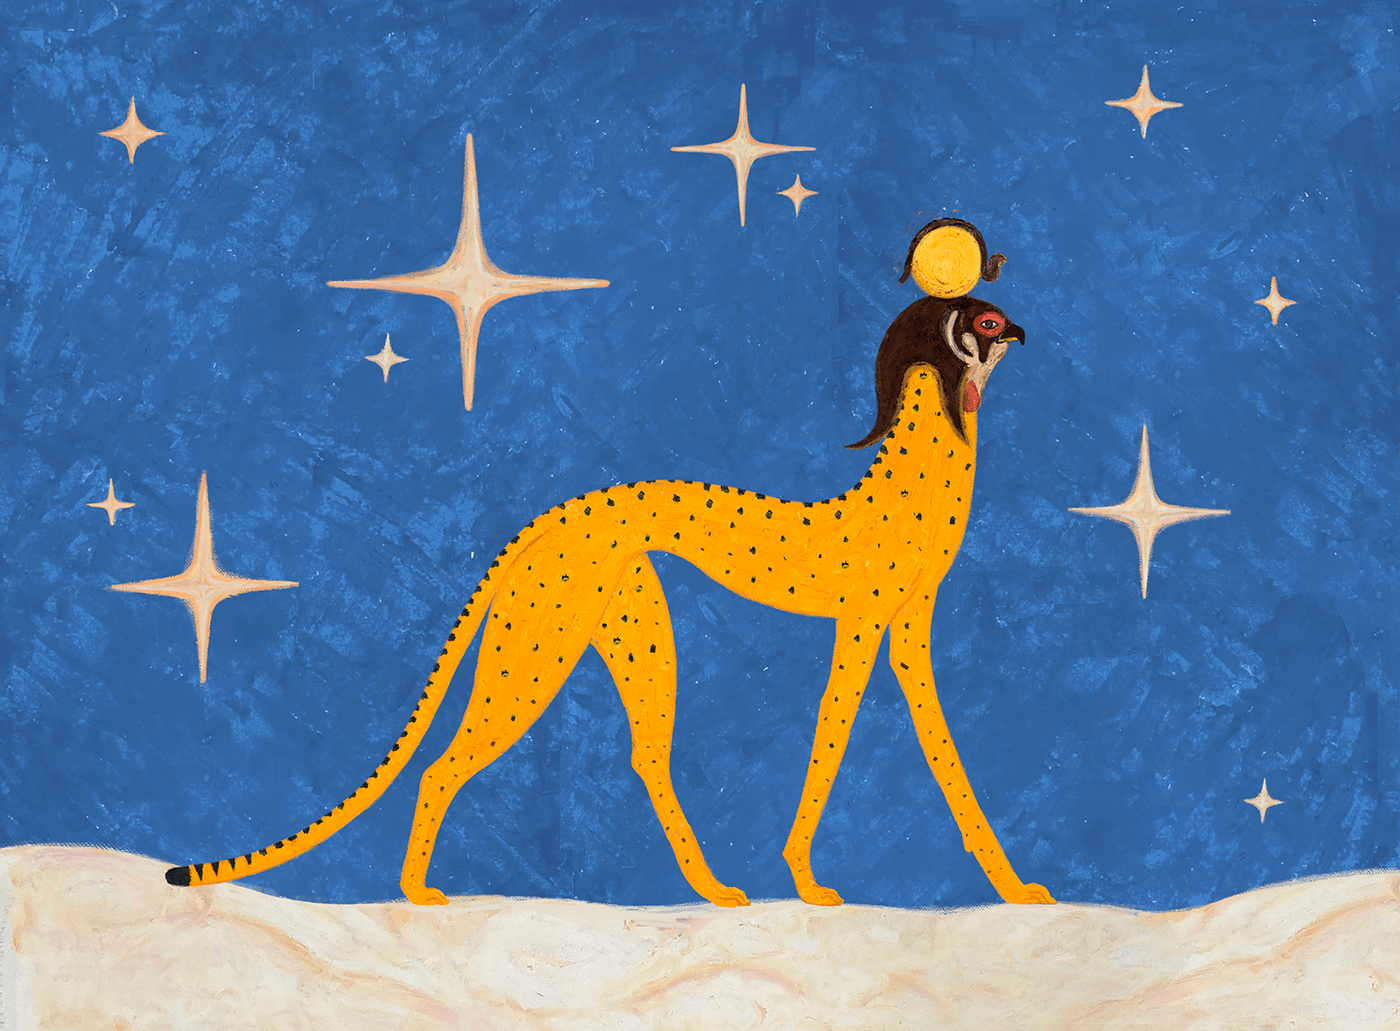 Cheetah with a bird head and stars.